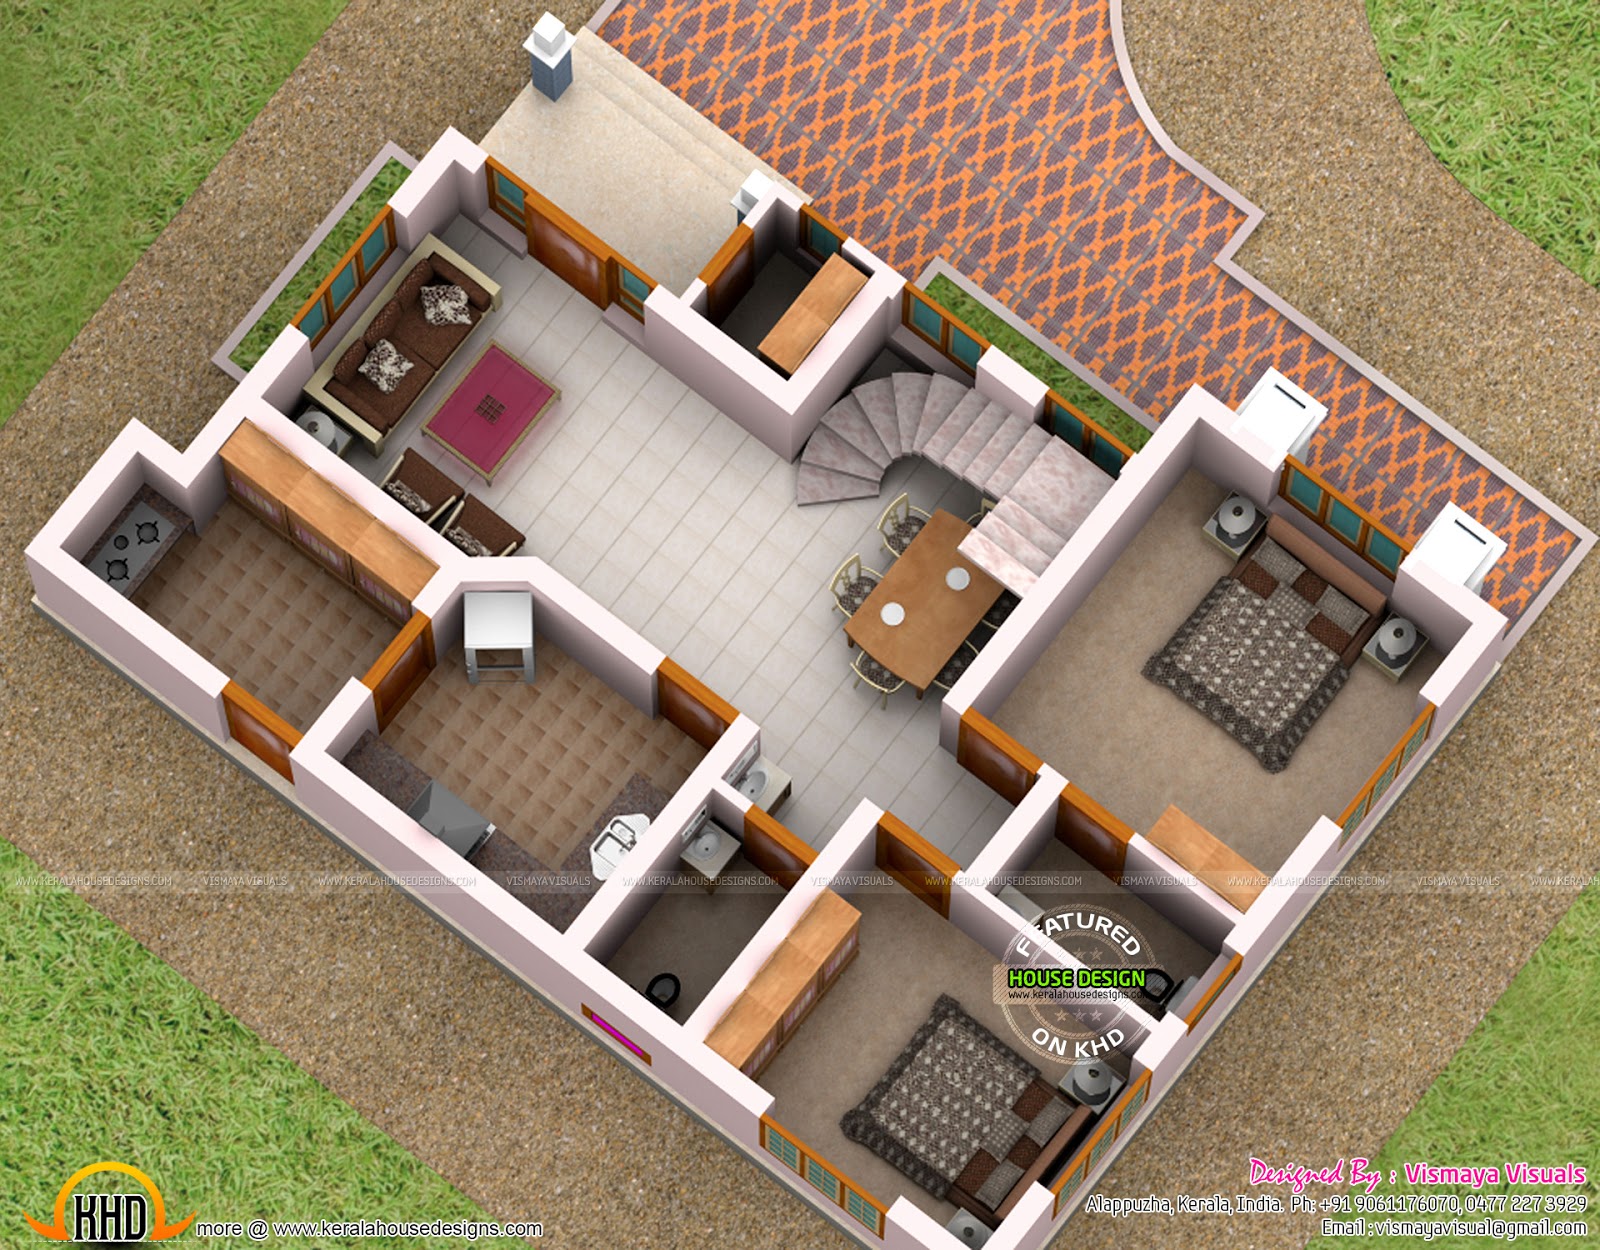 3d floor plan of 1496 sq-ft home - Kerala home design and floor plans